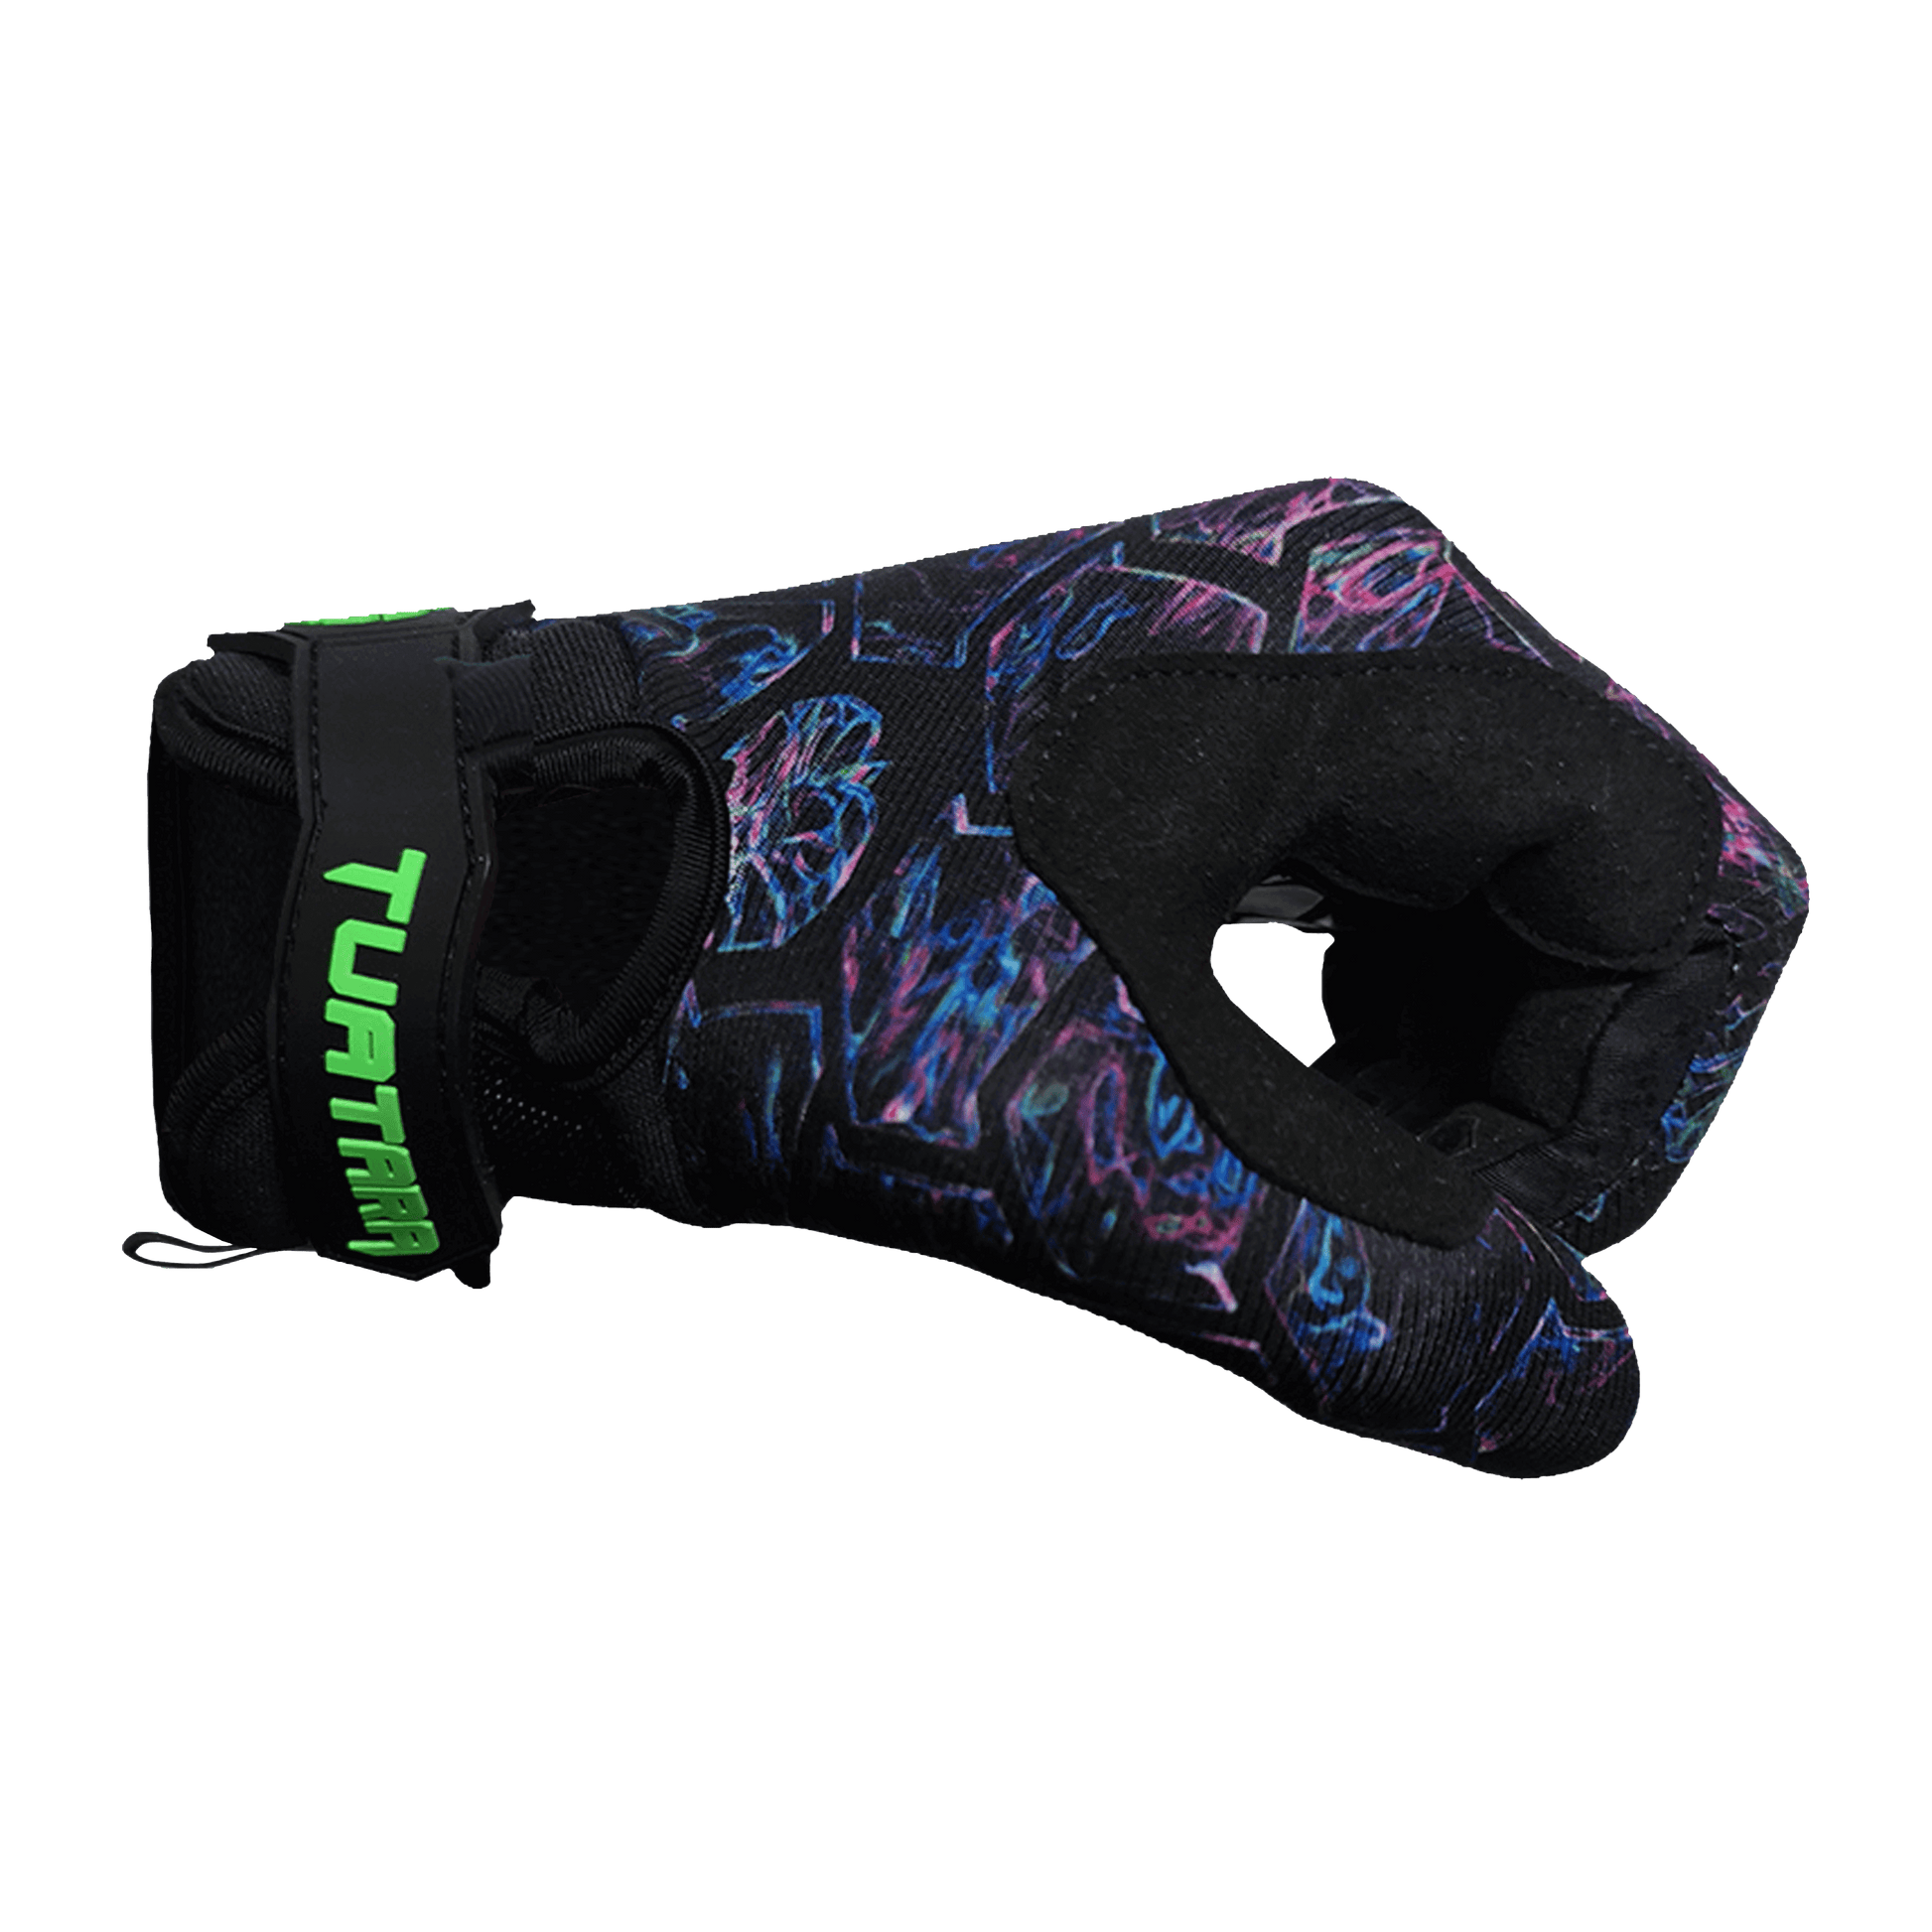 Tuatara Sim Racing Gloves PREDATOR Fist